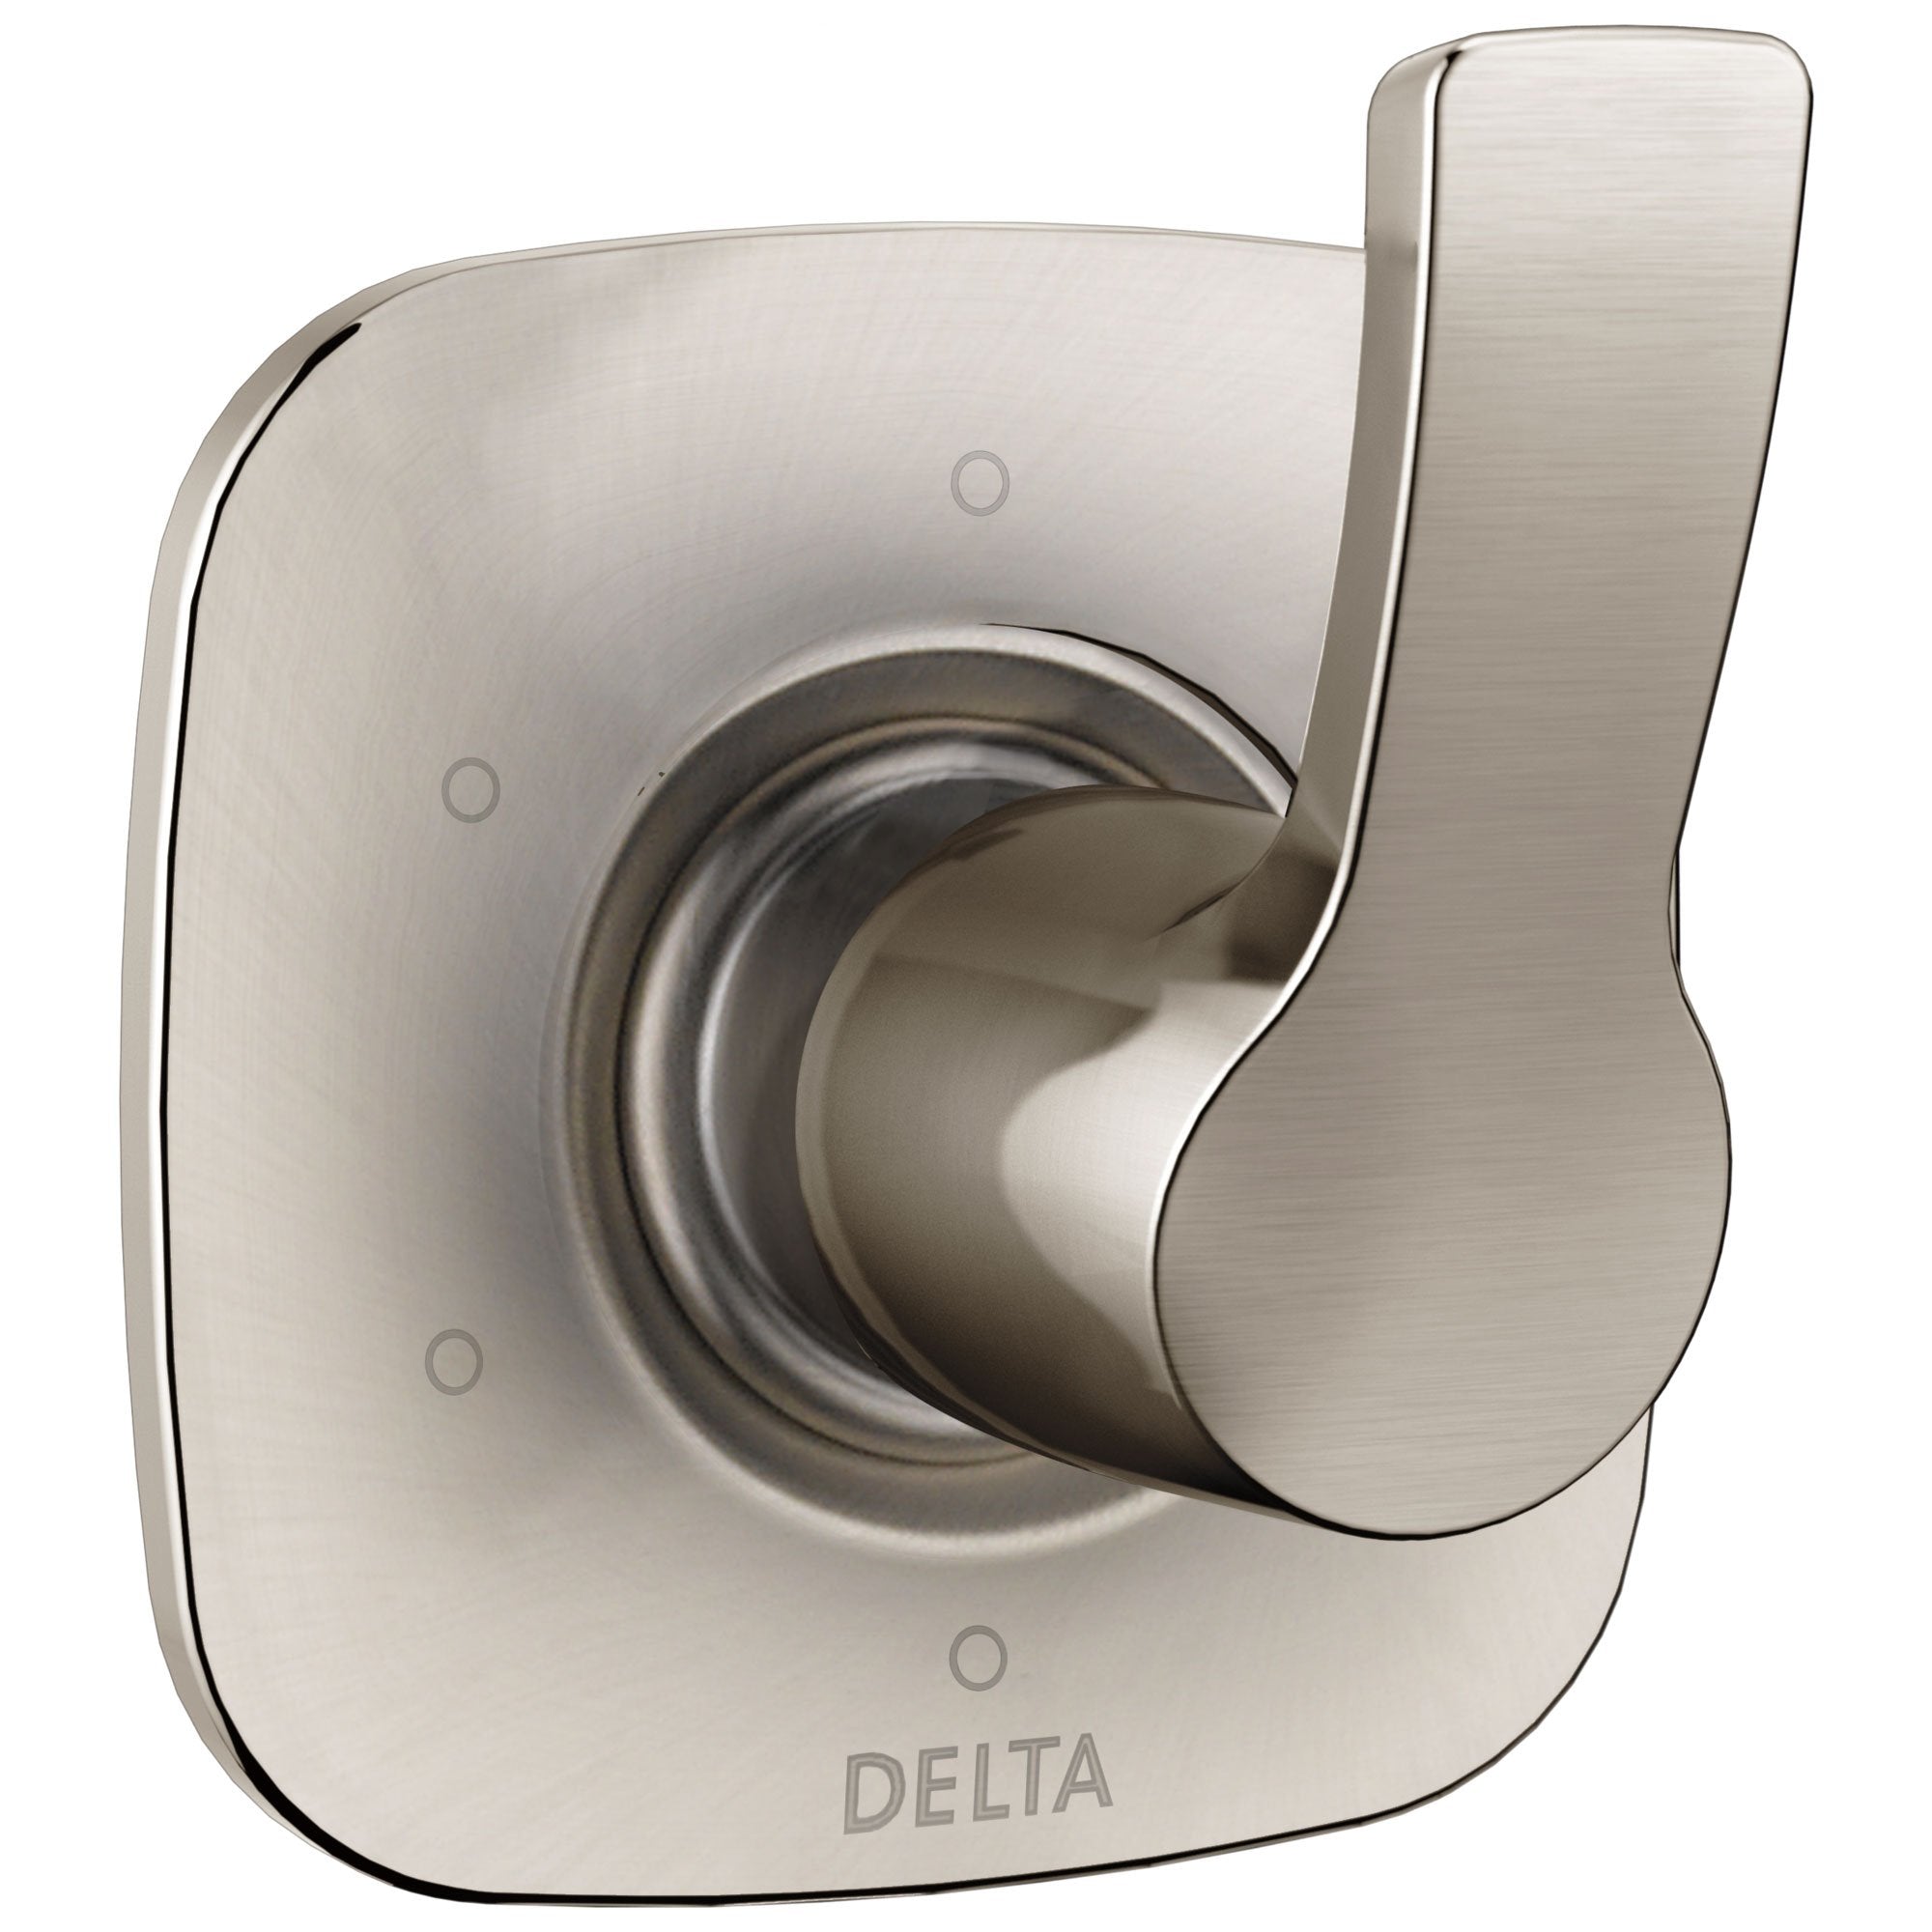 Delta Tesla Collection Stainless Steel Finish 6-Setting 3-Port Modern Single Handle Shower Diverter Includes Rough-in Valve D2053V